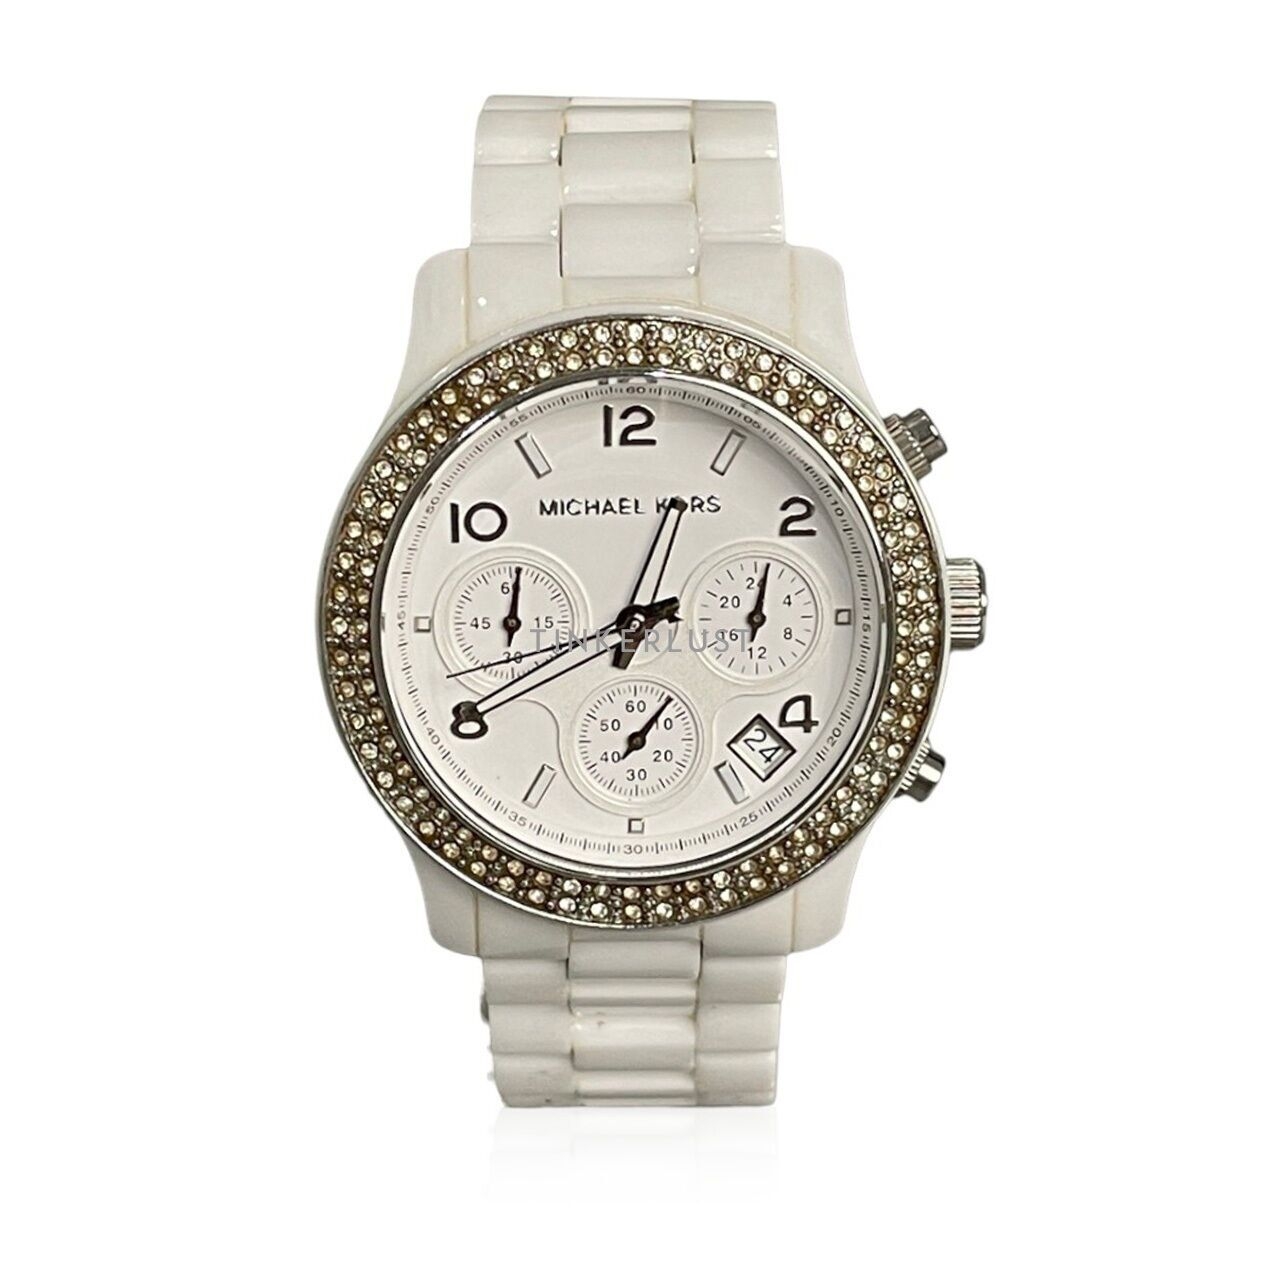 Michael Kors White Ceramic And Bracelet Watch